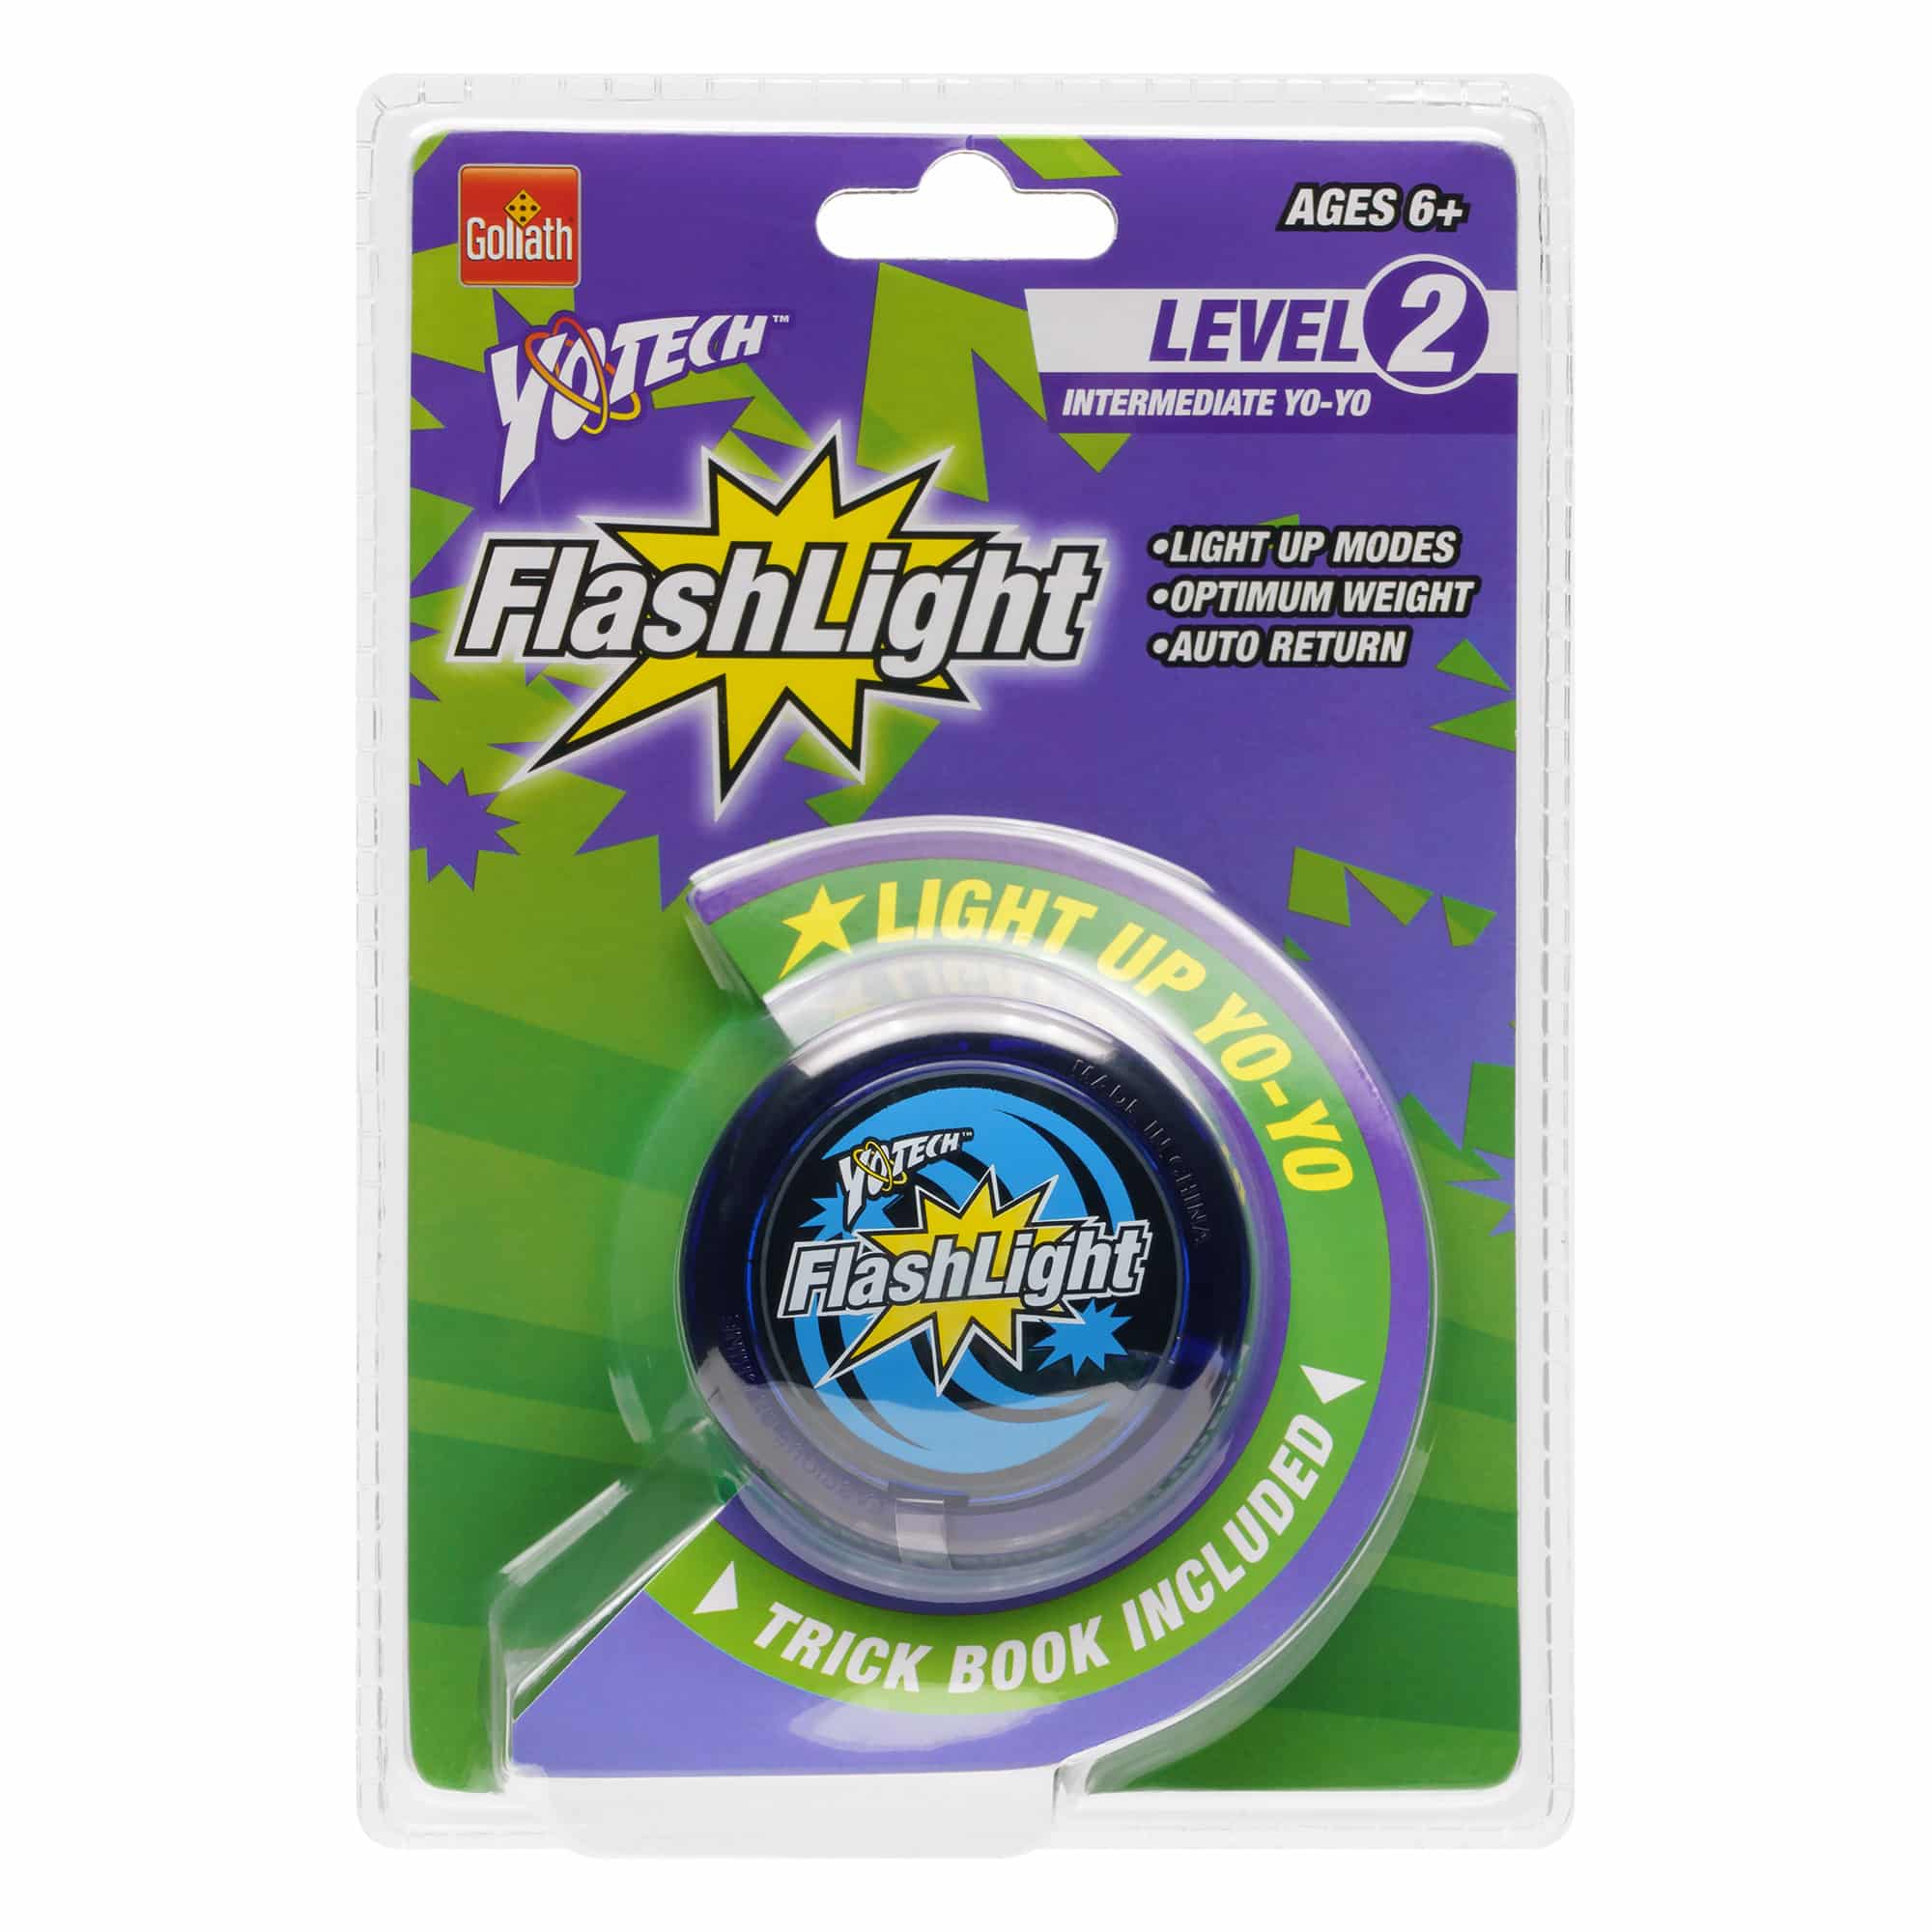 Yotech - FlashLIGHT Level 2 YoYo - Blue